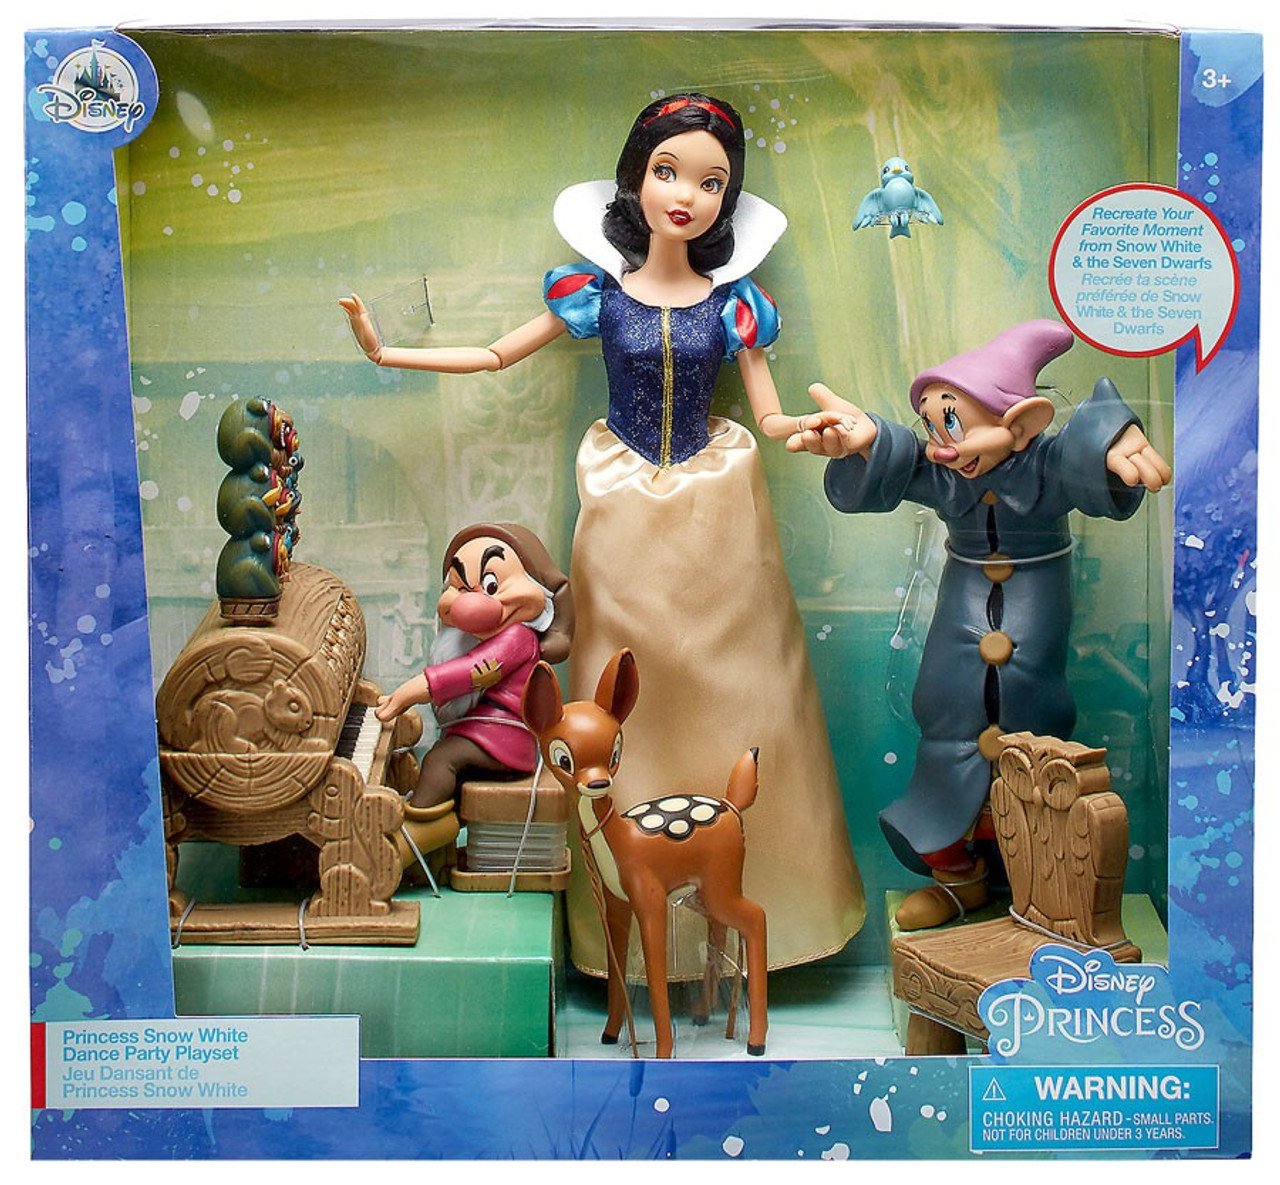 Disney Princess Snow White Princess Snow White Dance Party Exclusive Playset Toywiz 